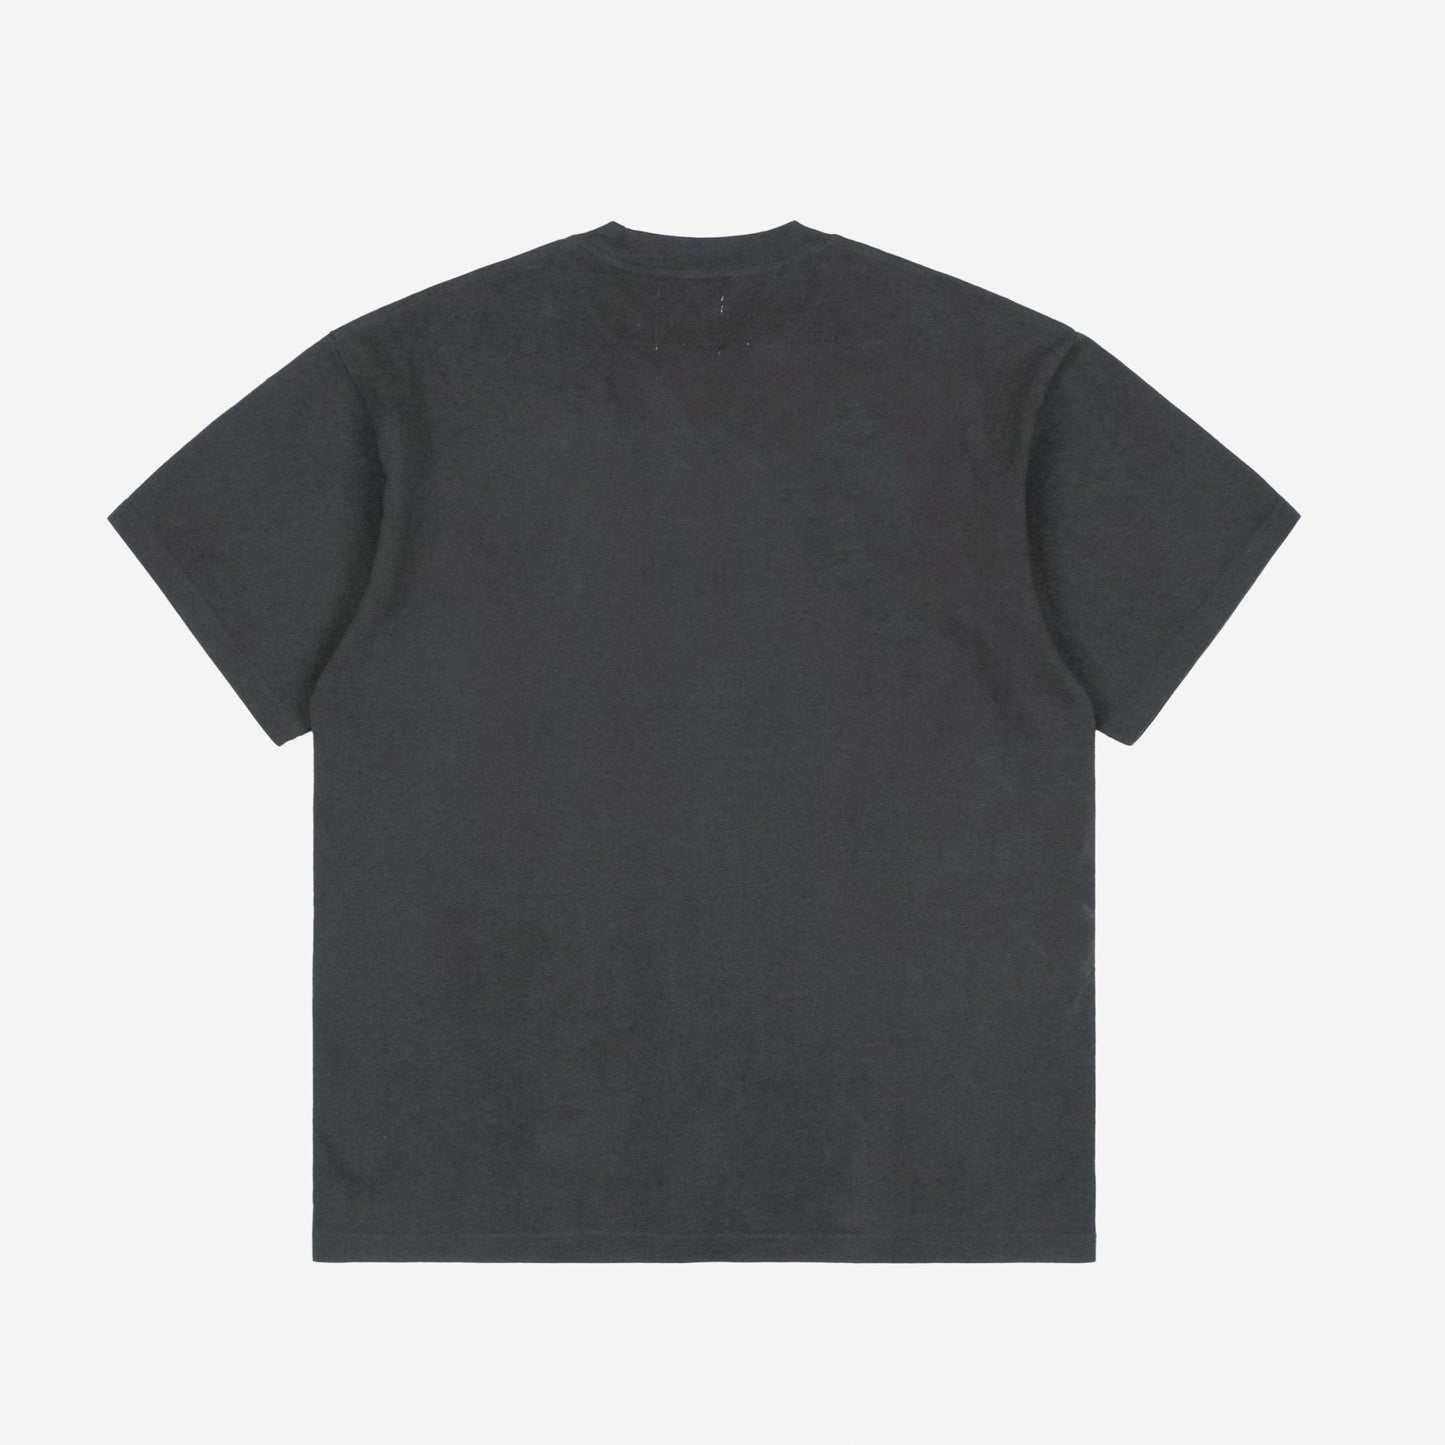 Gallery Dept Black Pocket T-Shirt